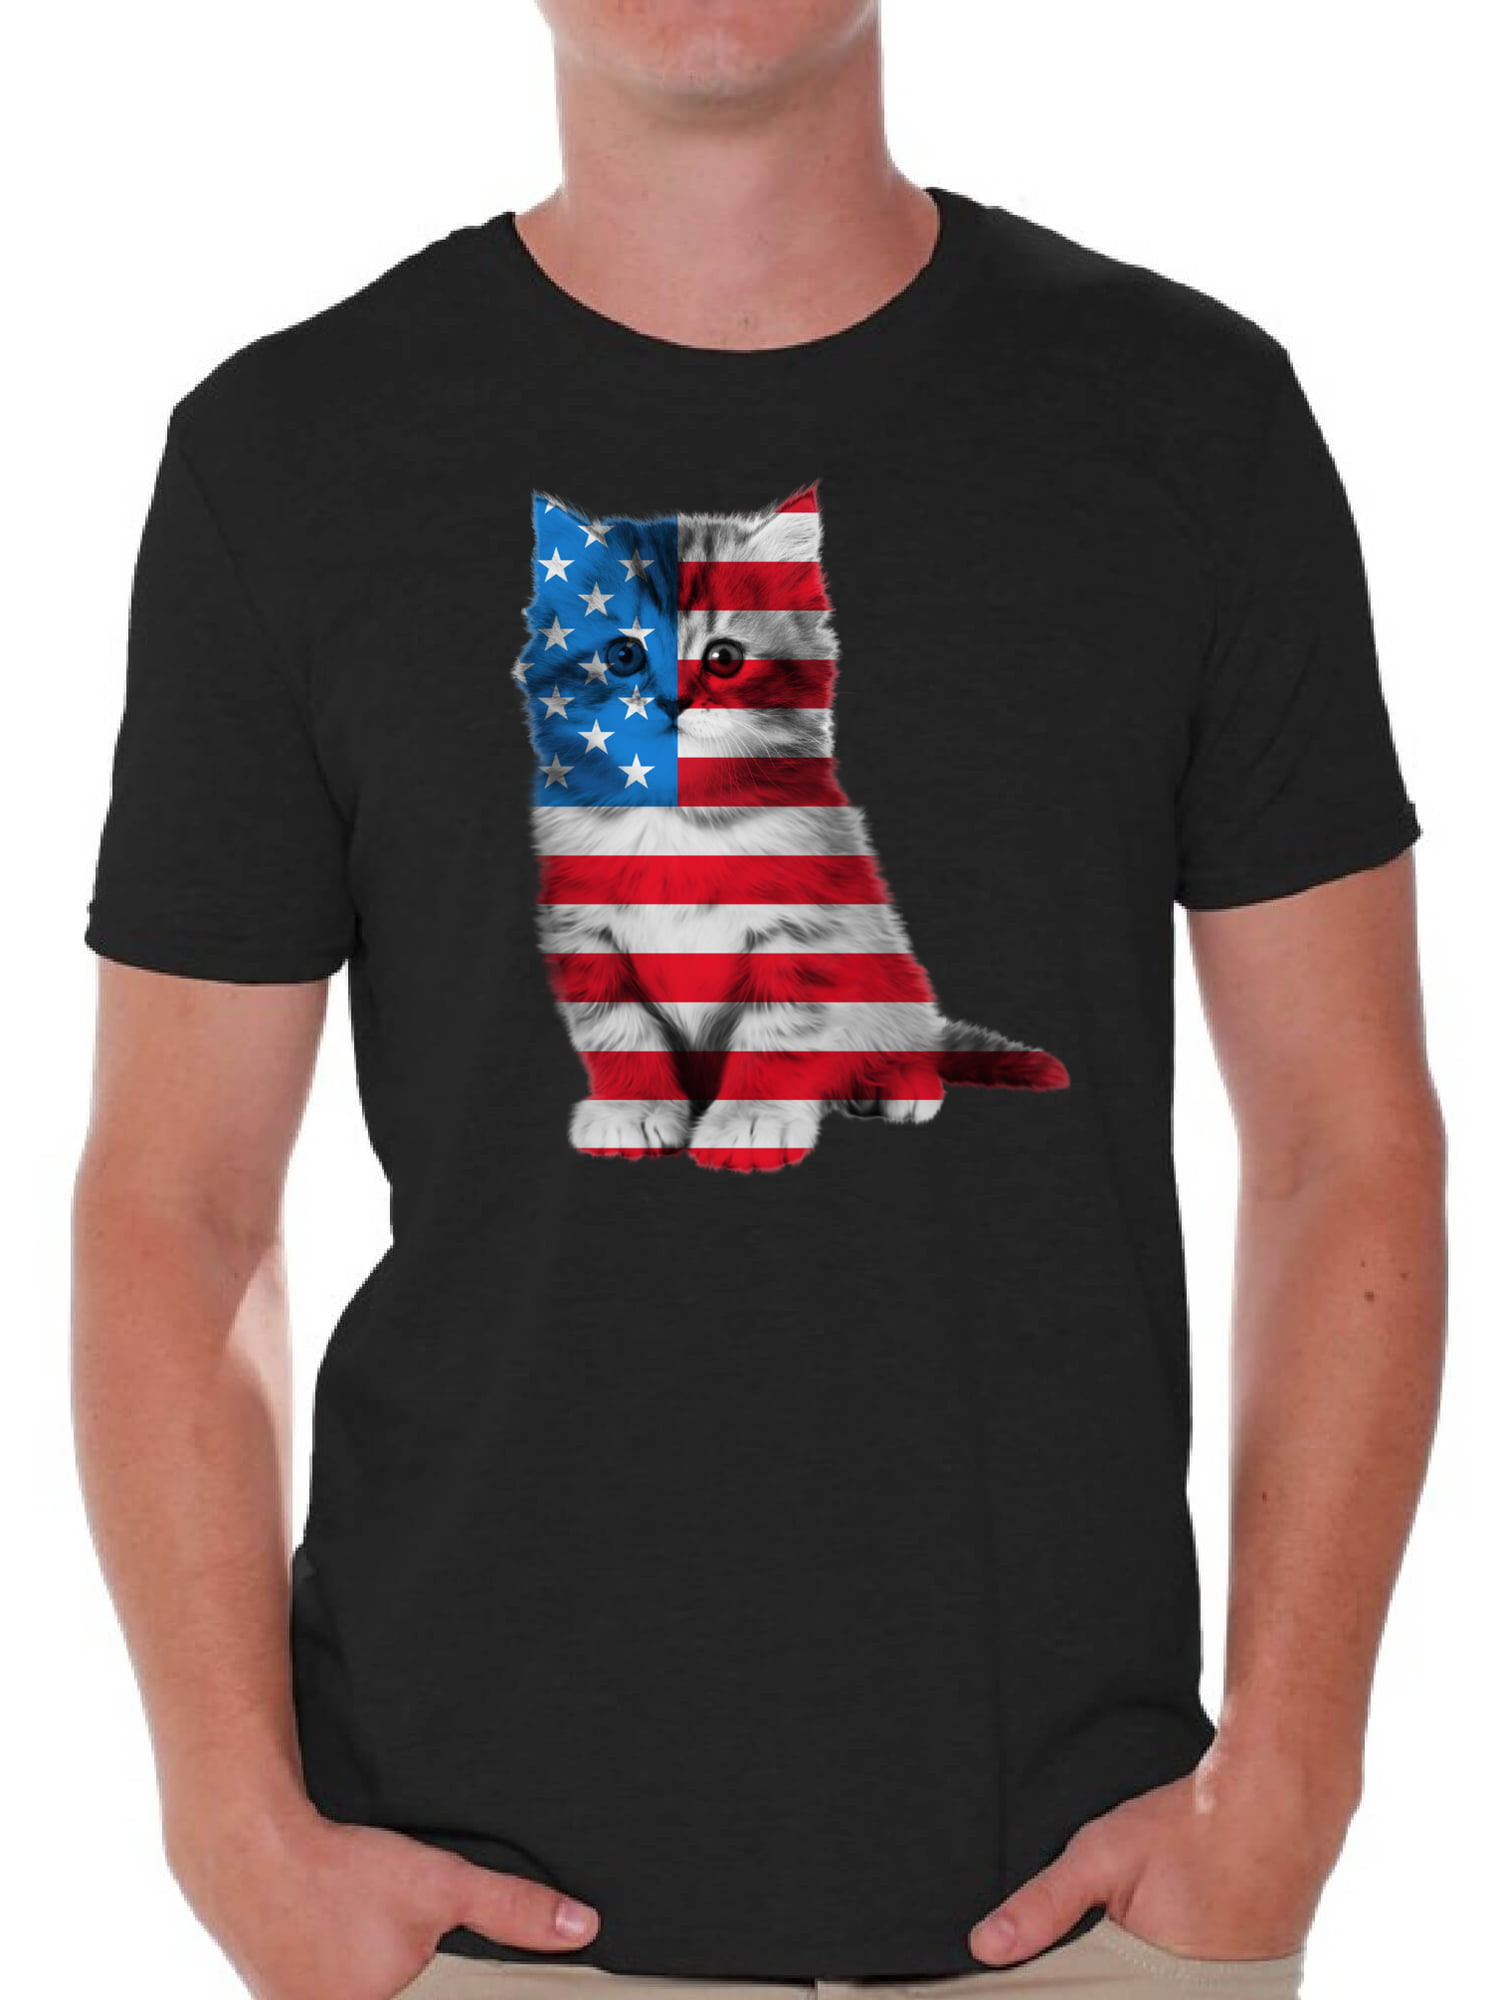 Light Up The Sky USA Tee USA TShirt America 4th of july Memorial Day Fourth of July Patriotic Shirt USA Shirt unisex T-shirt